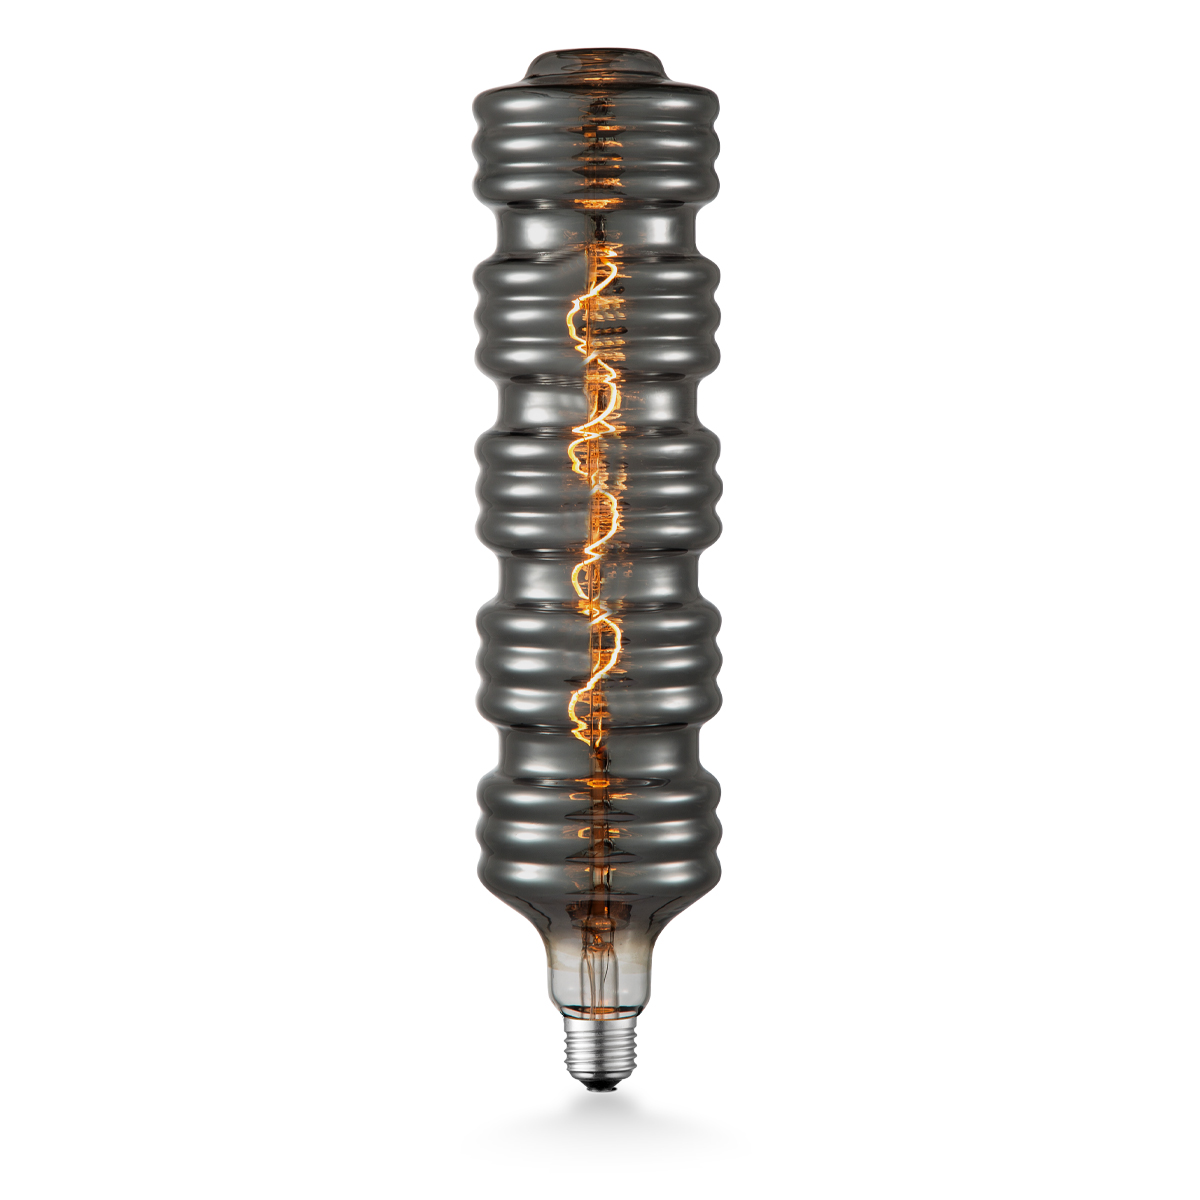 Tangla lighting - TLB-8052-04TM - LED Light Bulb Single Spiral filament - special 4W titanium - knots - dimmable - E27